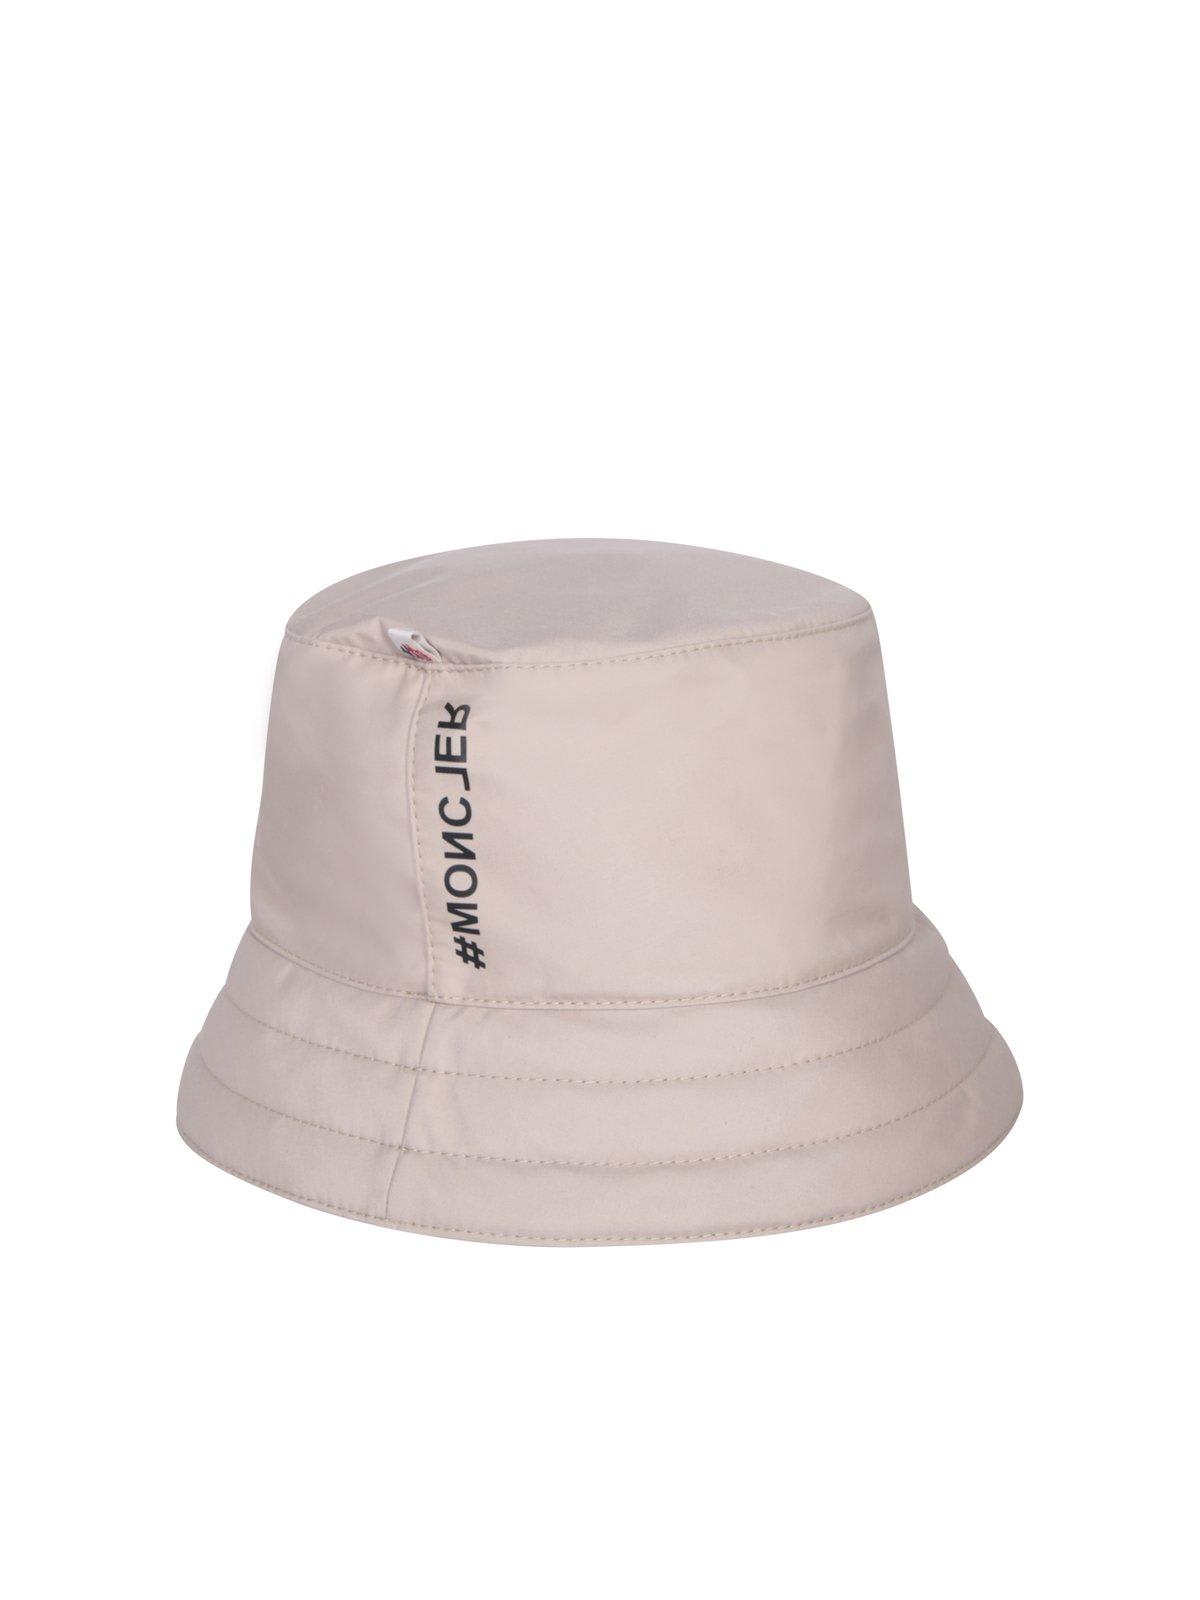 Shop Moncler Logo Printed Bucket Hat